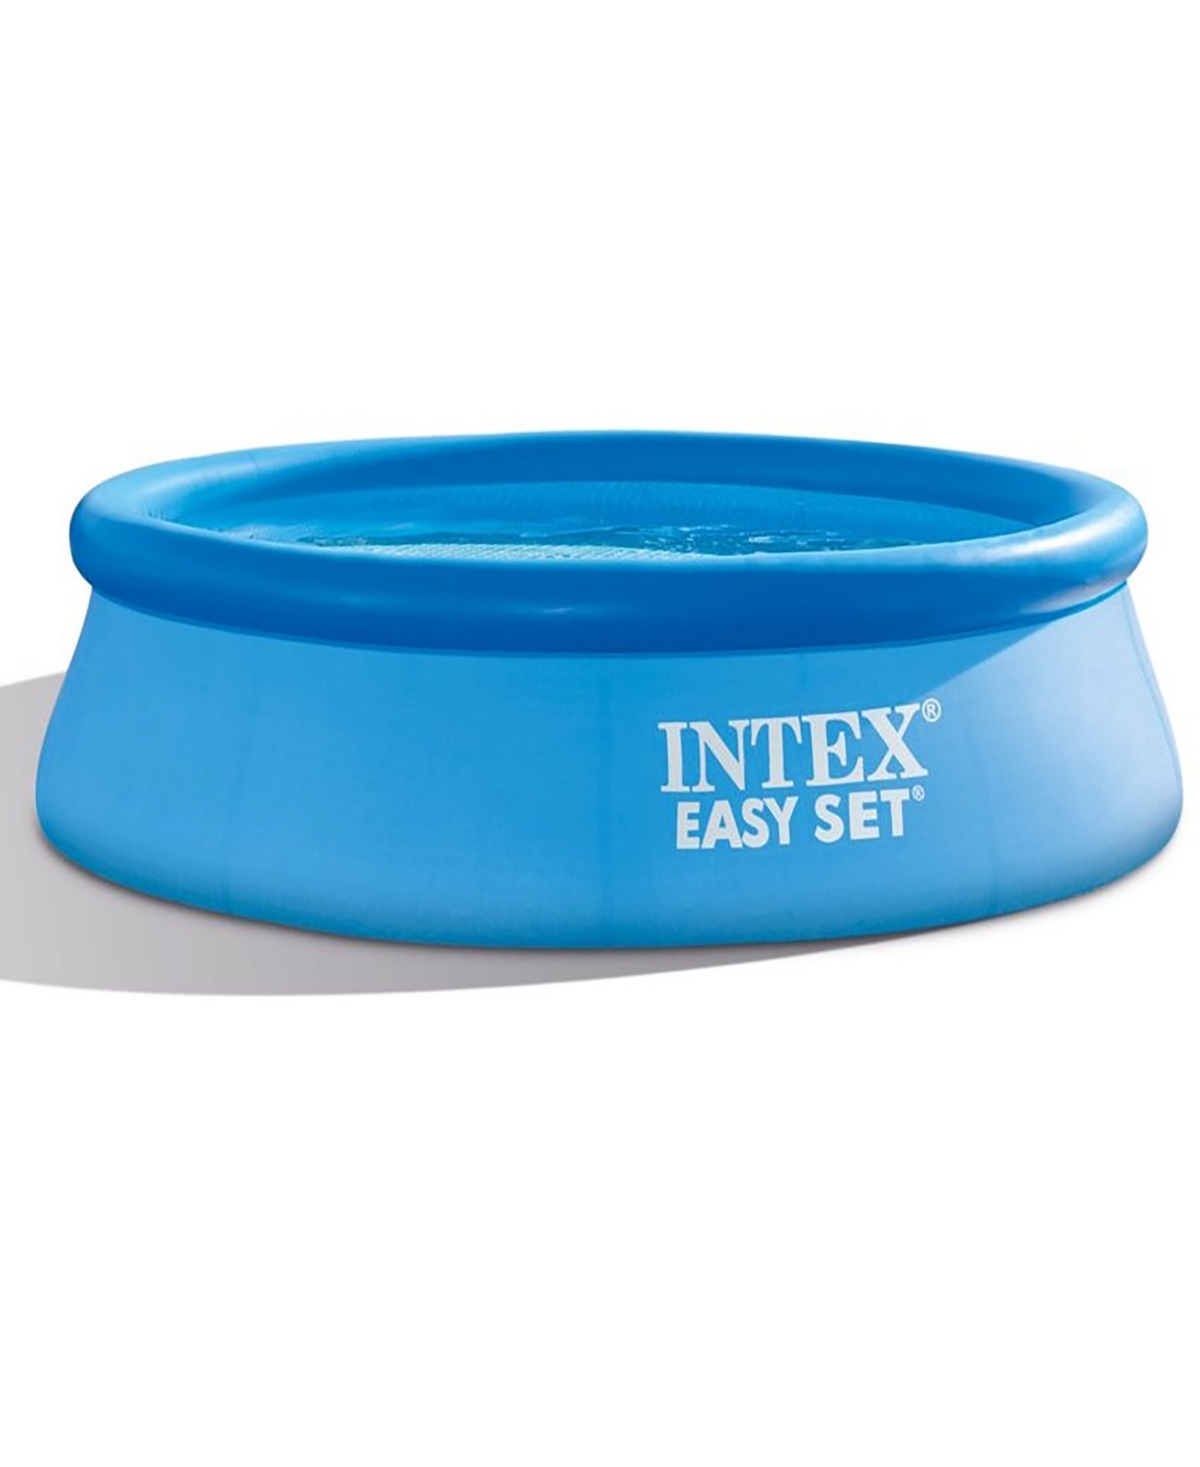 Intex Easy Set 10' X 30" Inflatable Pool In Multi